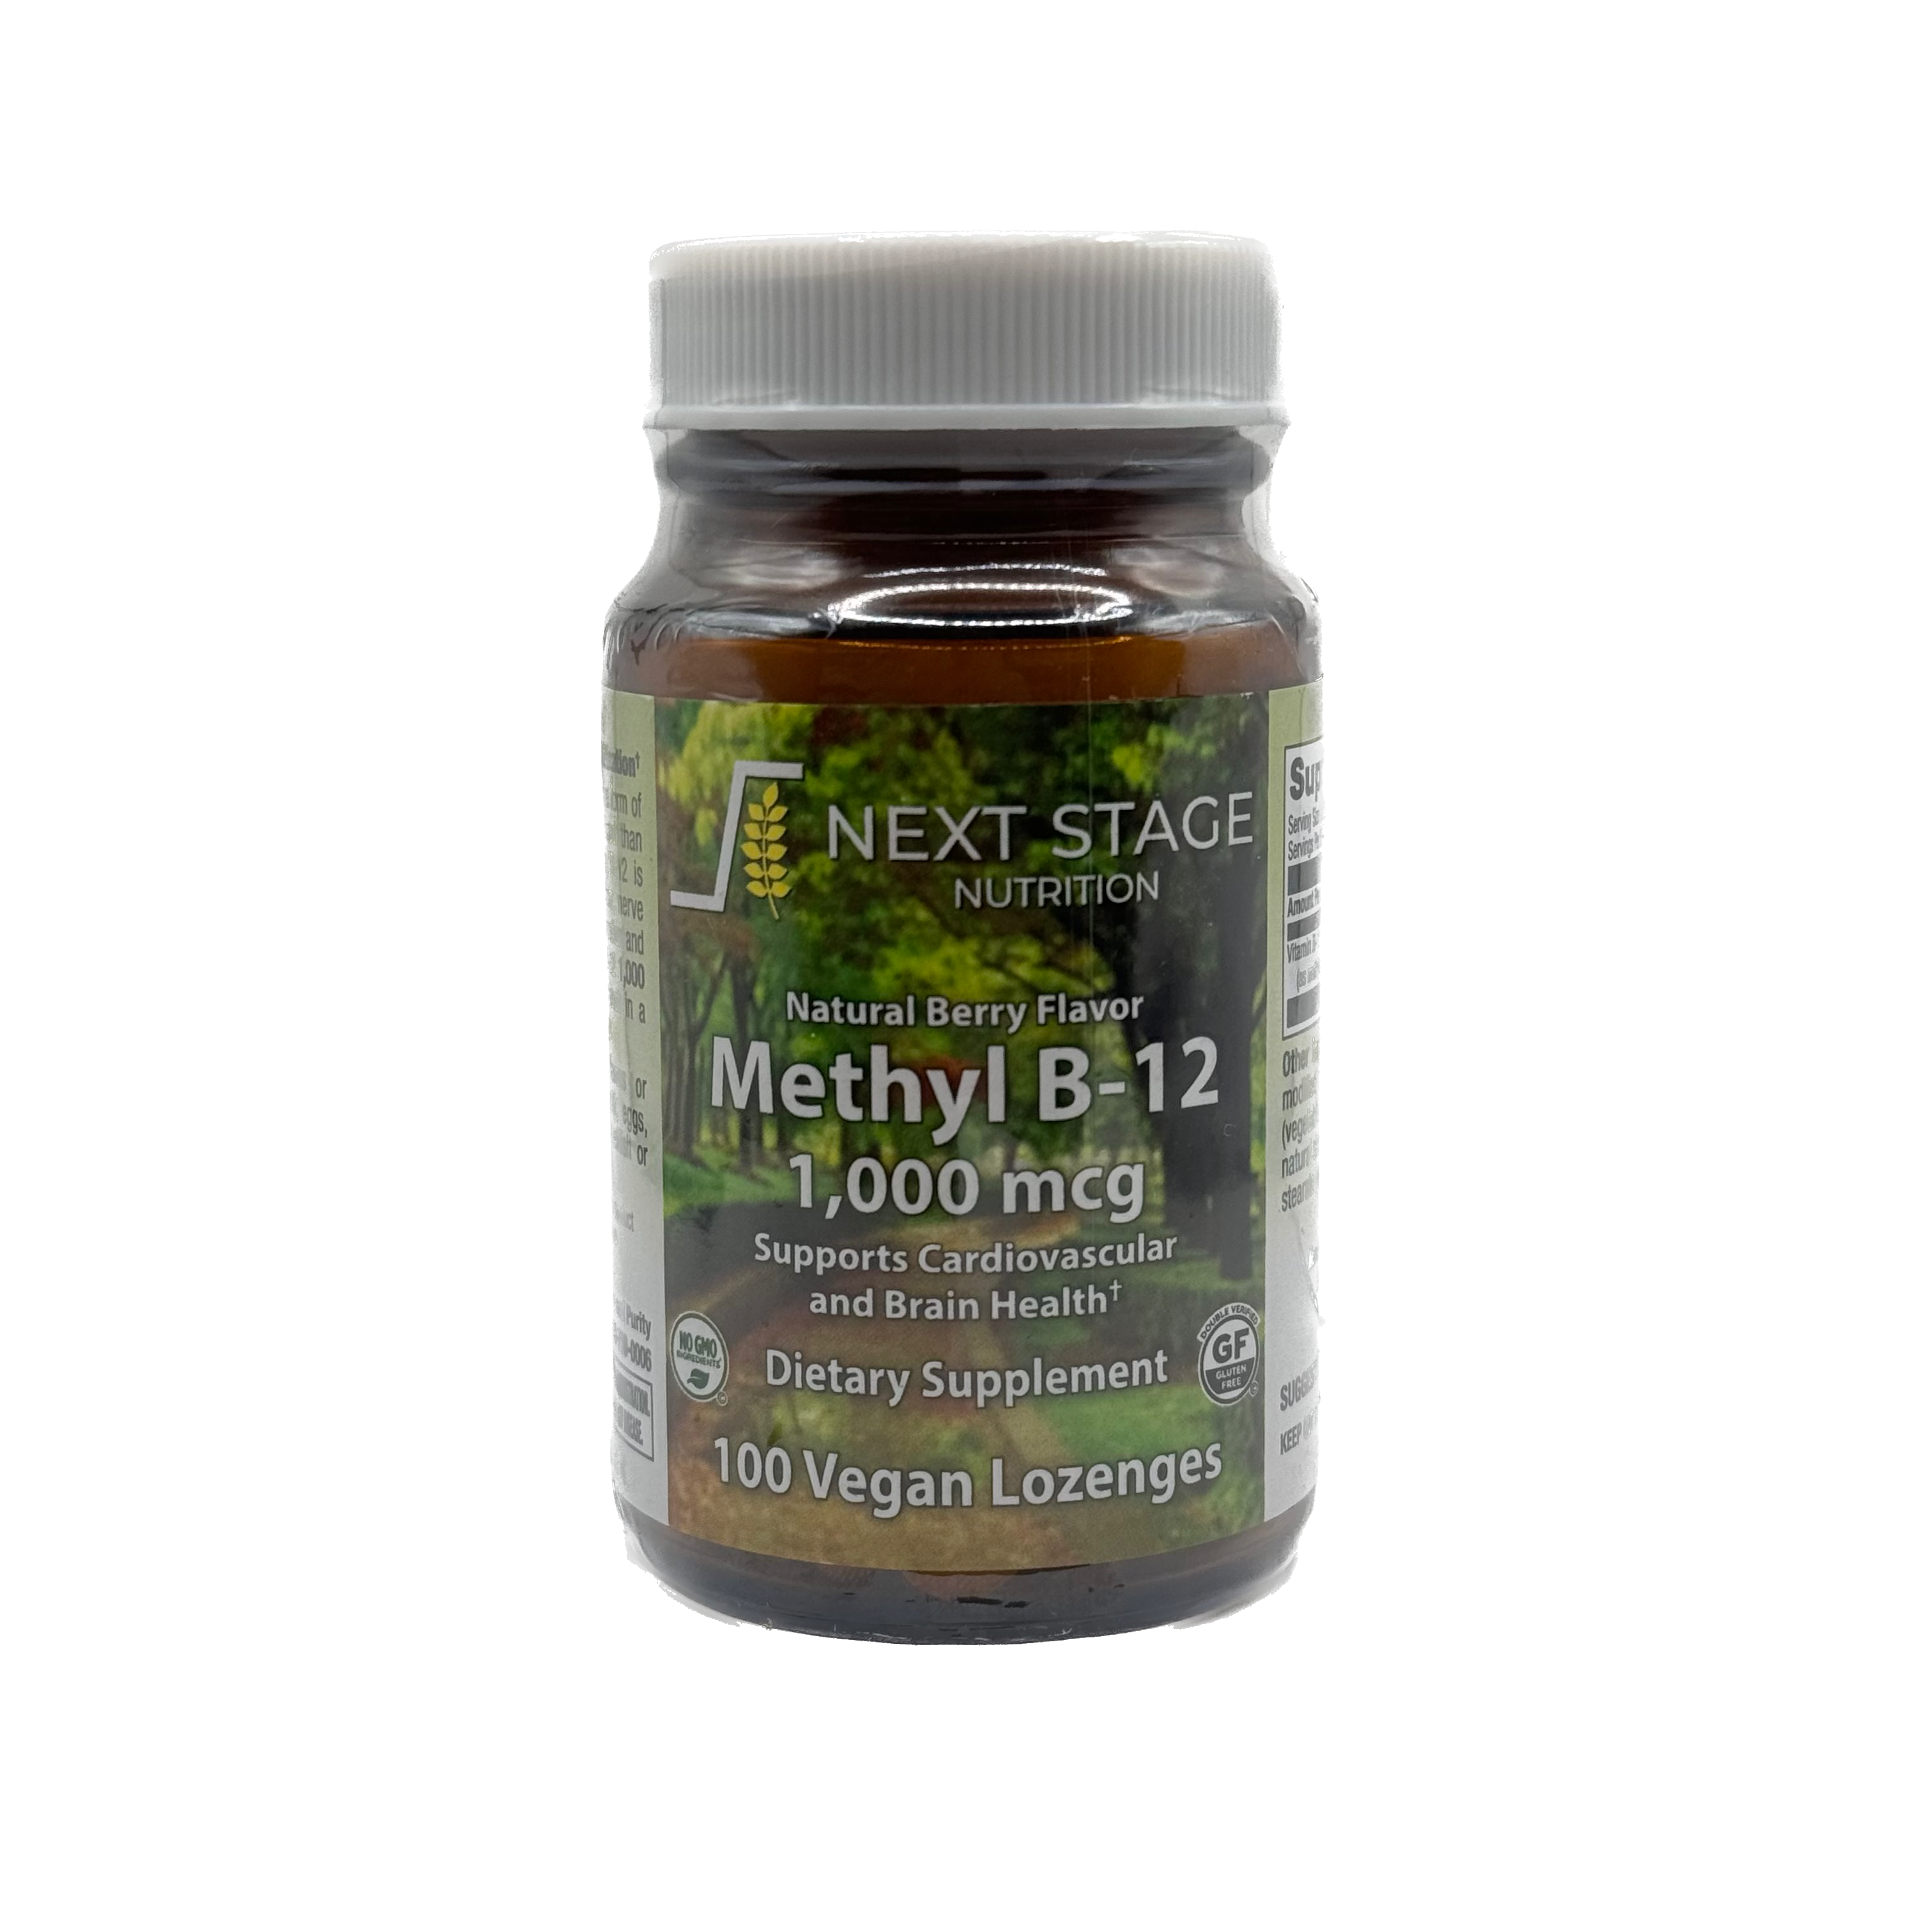 Next Stage Methyl B-12 1,000 mcg Natural Berry Flavor